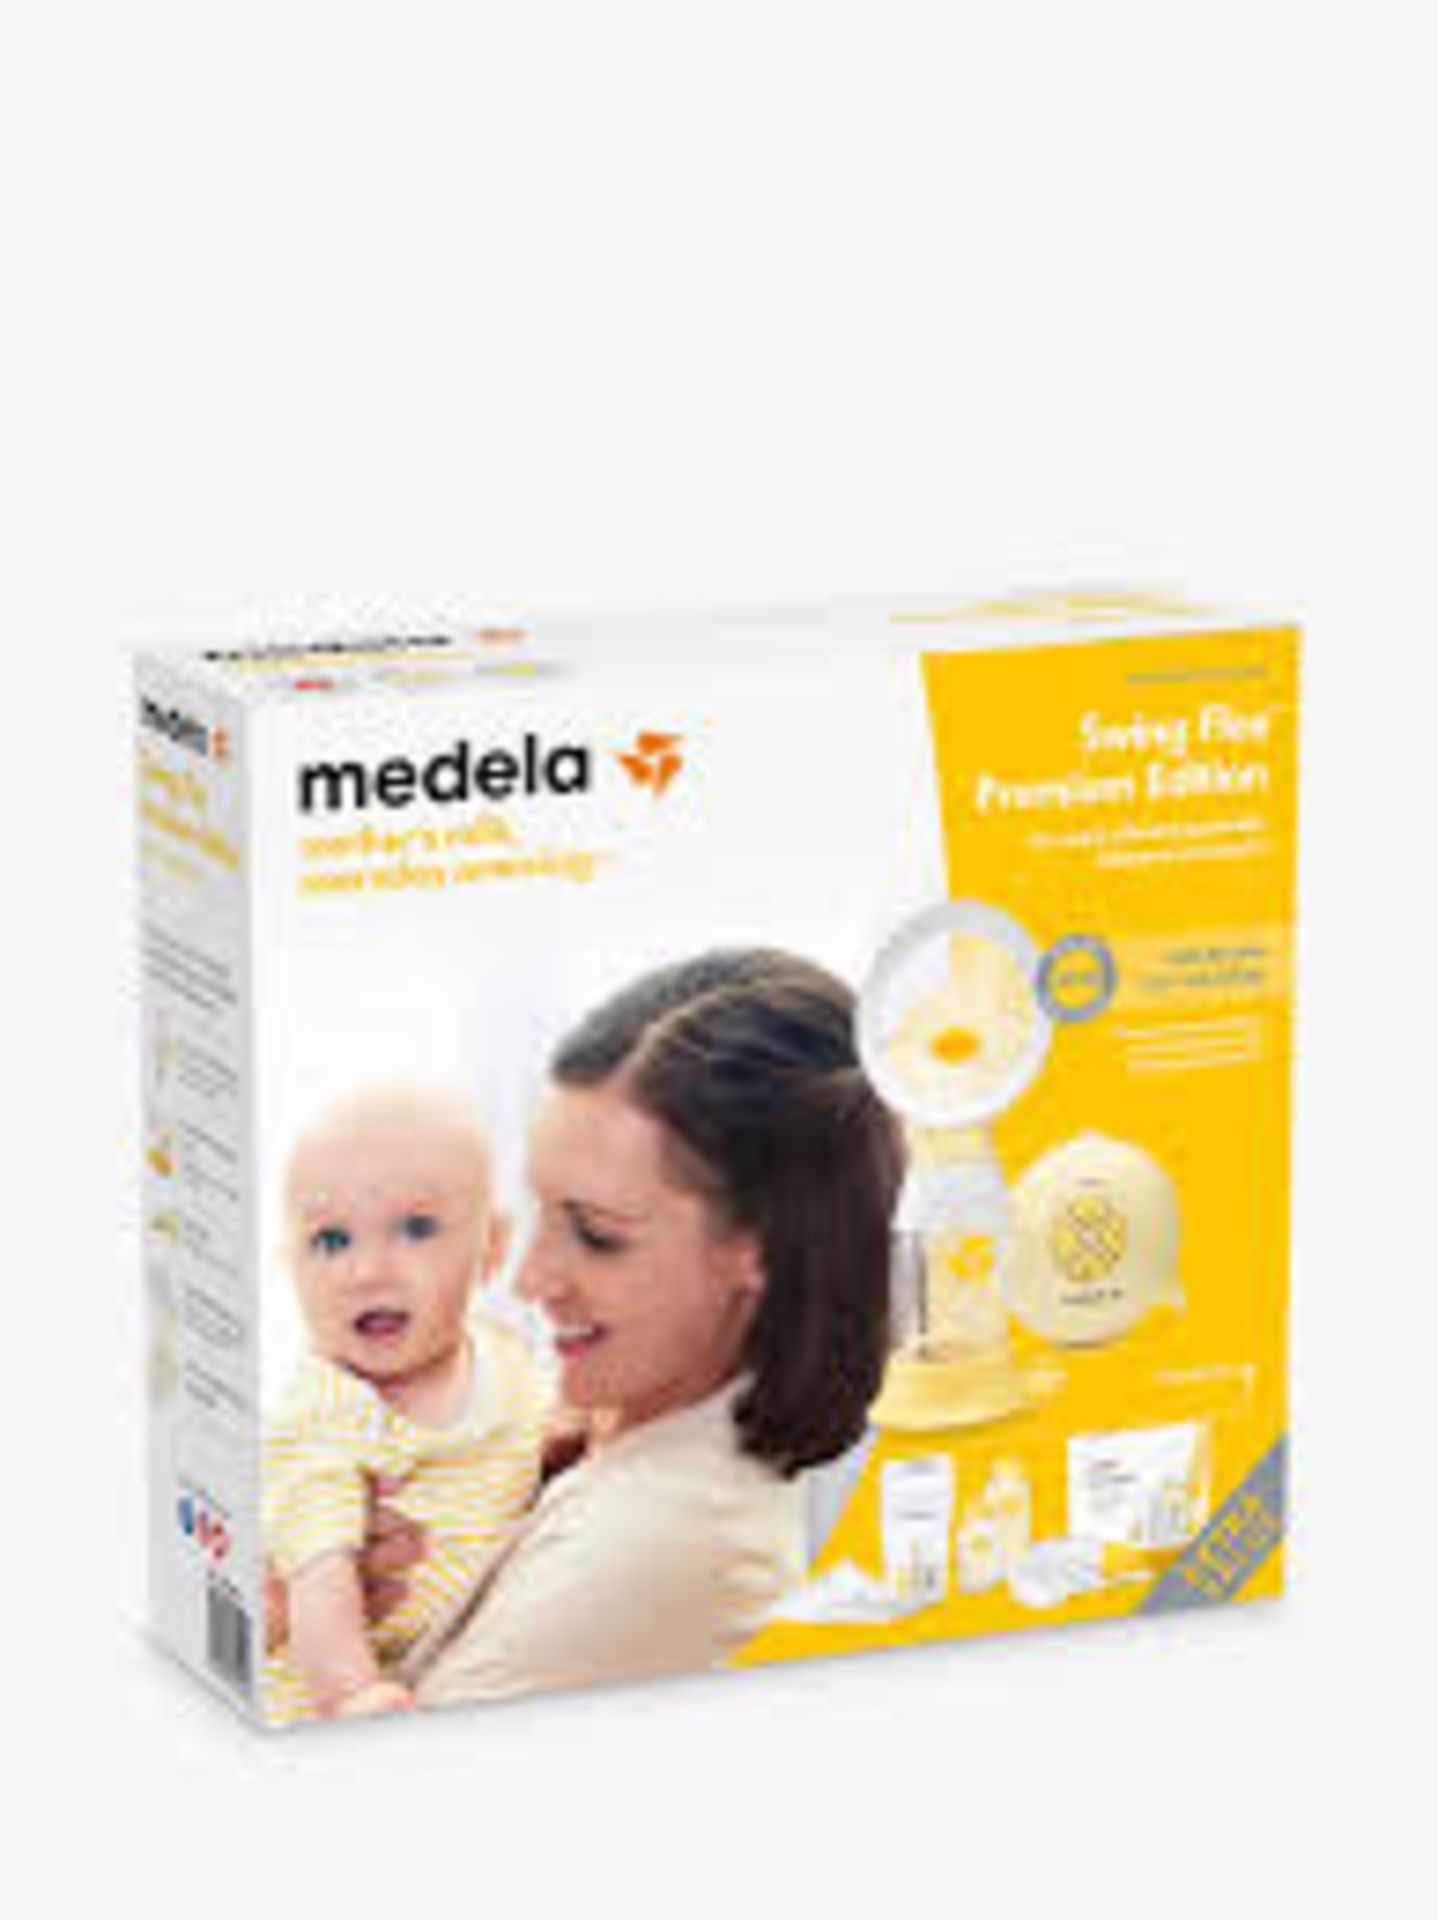 Medela Swing Flex Premium Edition Breast Pump RRP £145 (MBW611749) (Pictures Are For Illustration